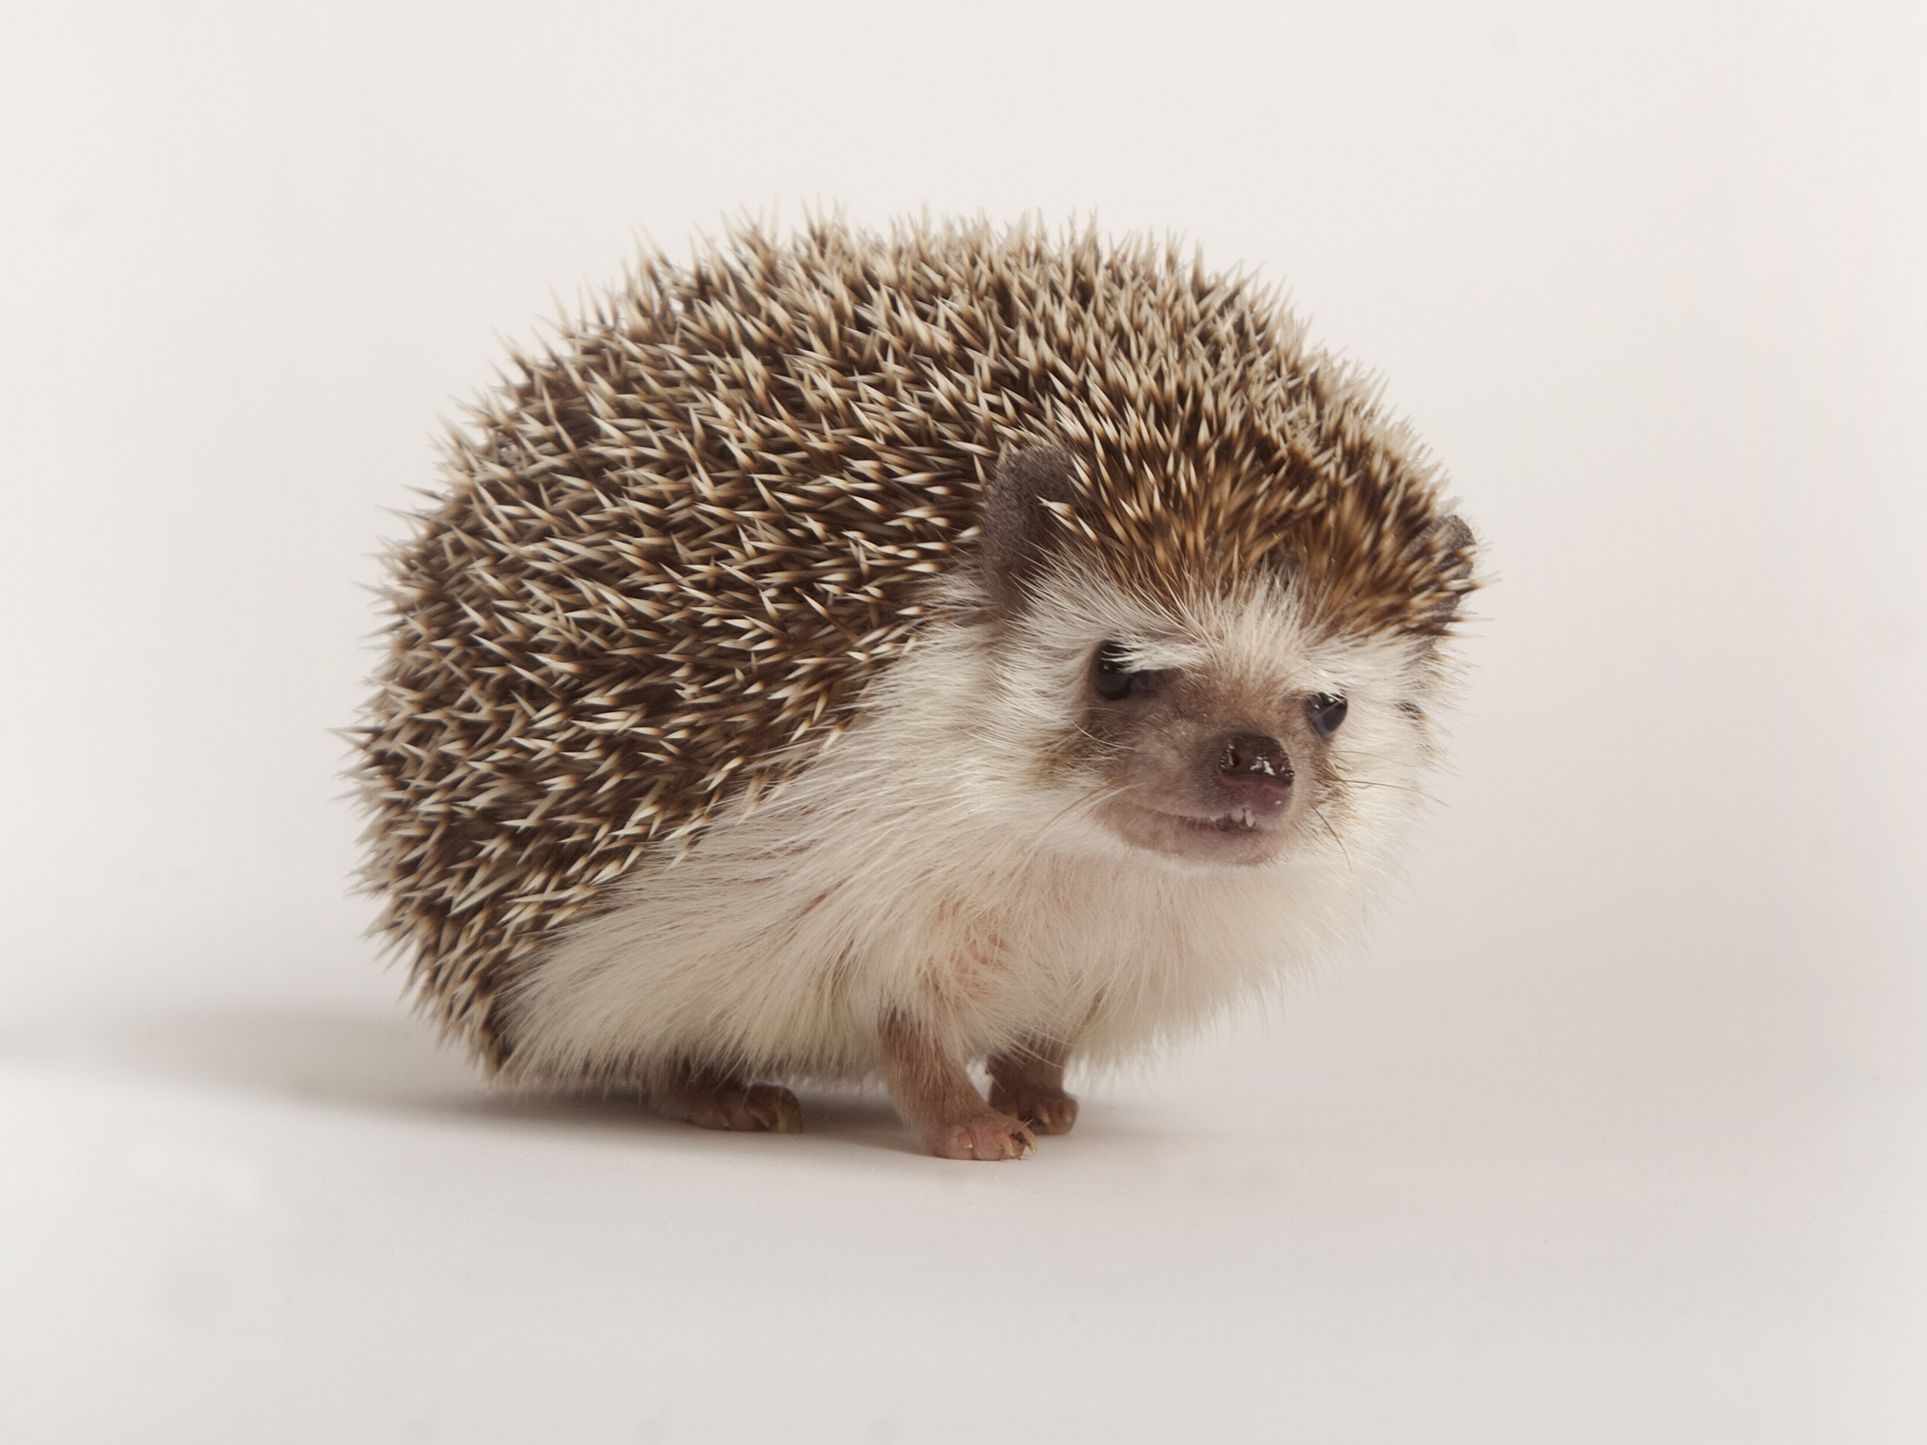 A Picture Of A Hedgehog - KibrisPDR